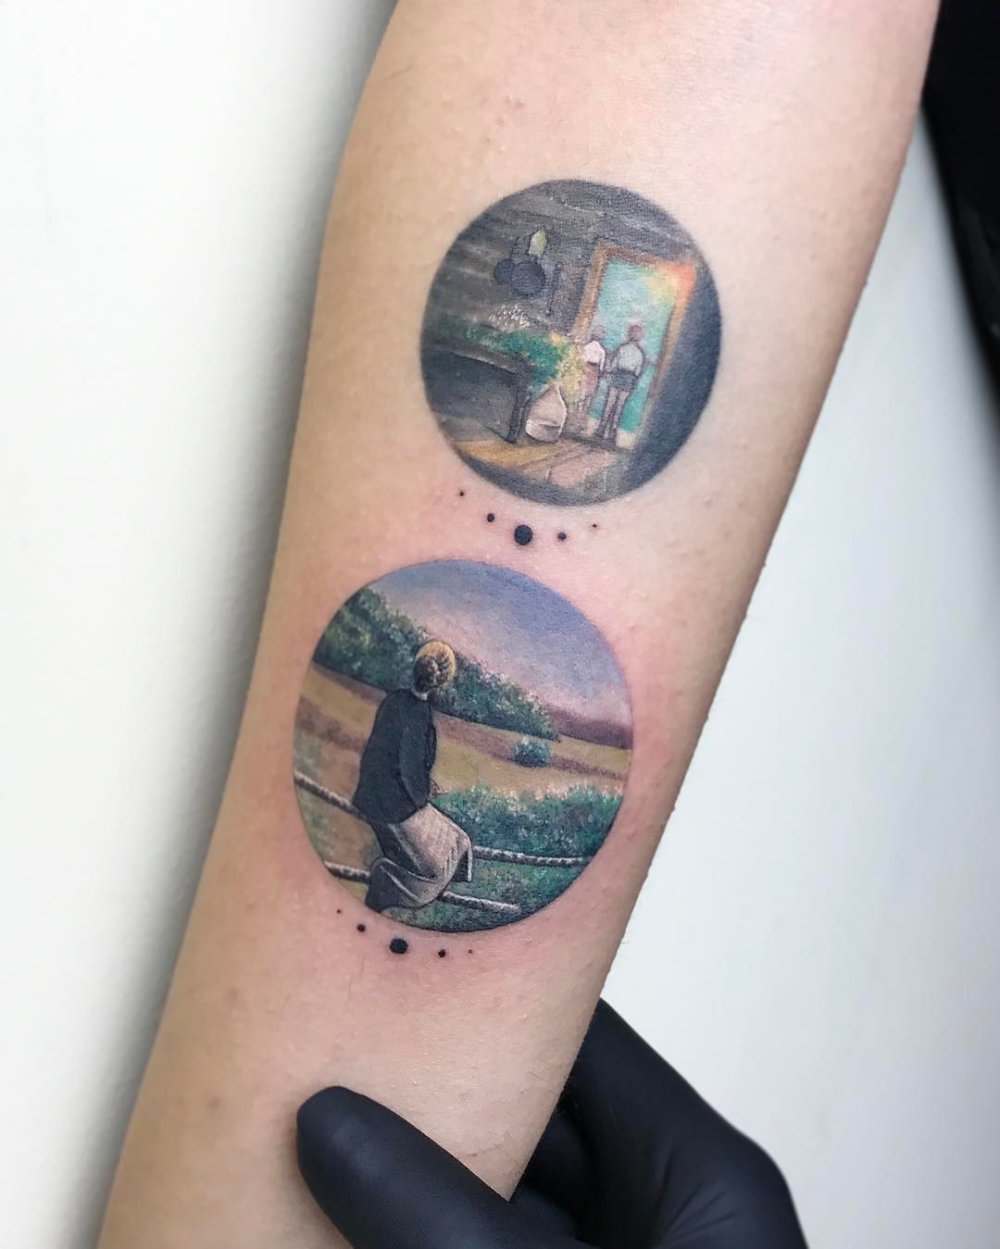 Dazzlingly Beautiful Illustration Tattoos Inside Tiny Circles By Eva Krbdk 11